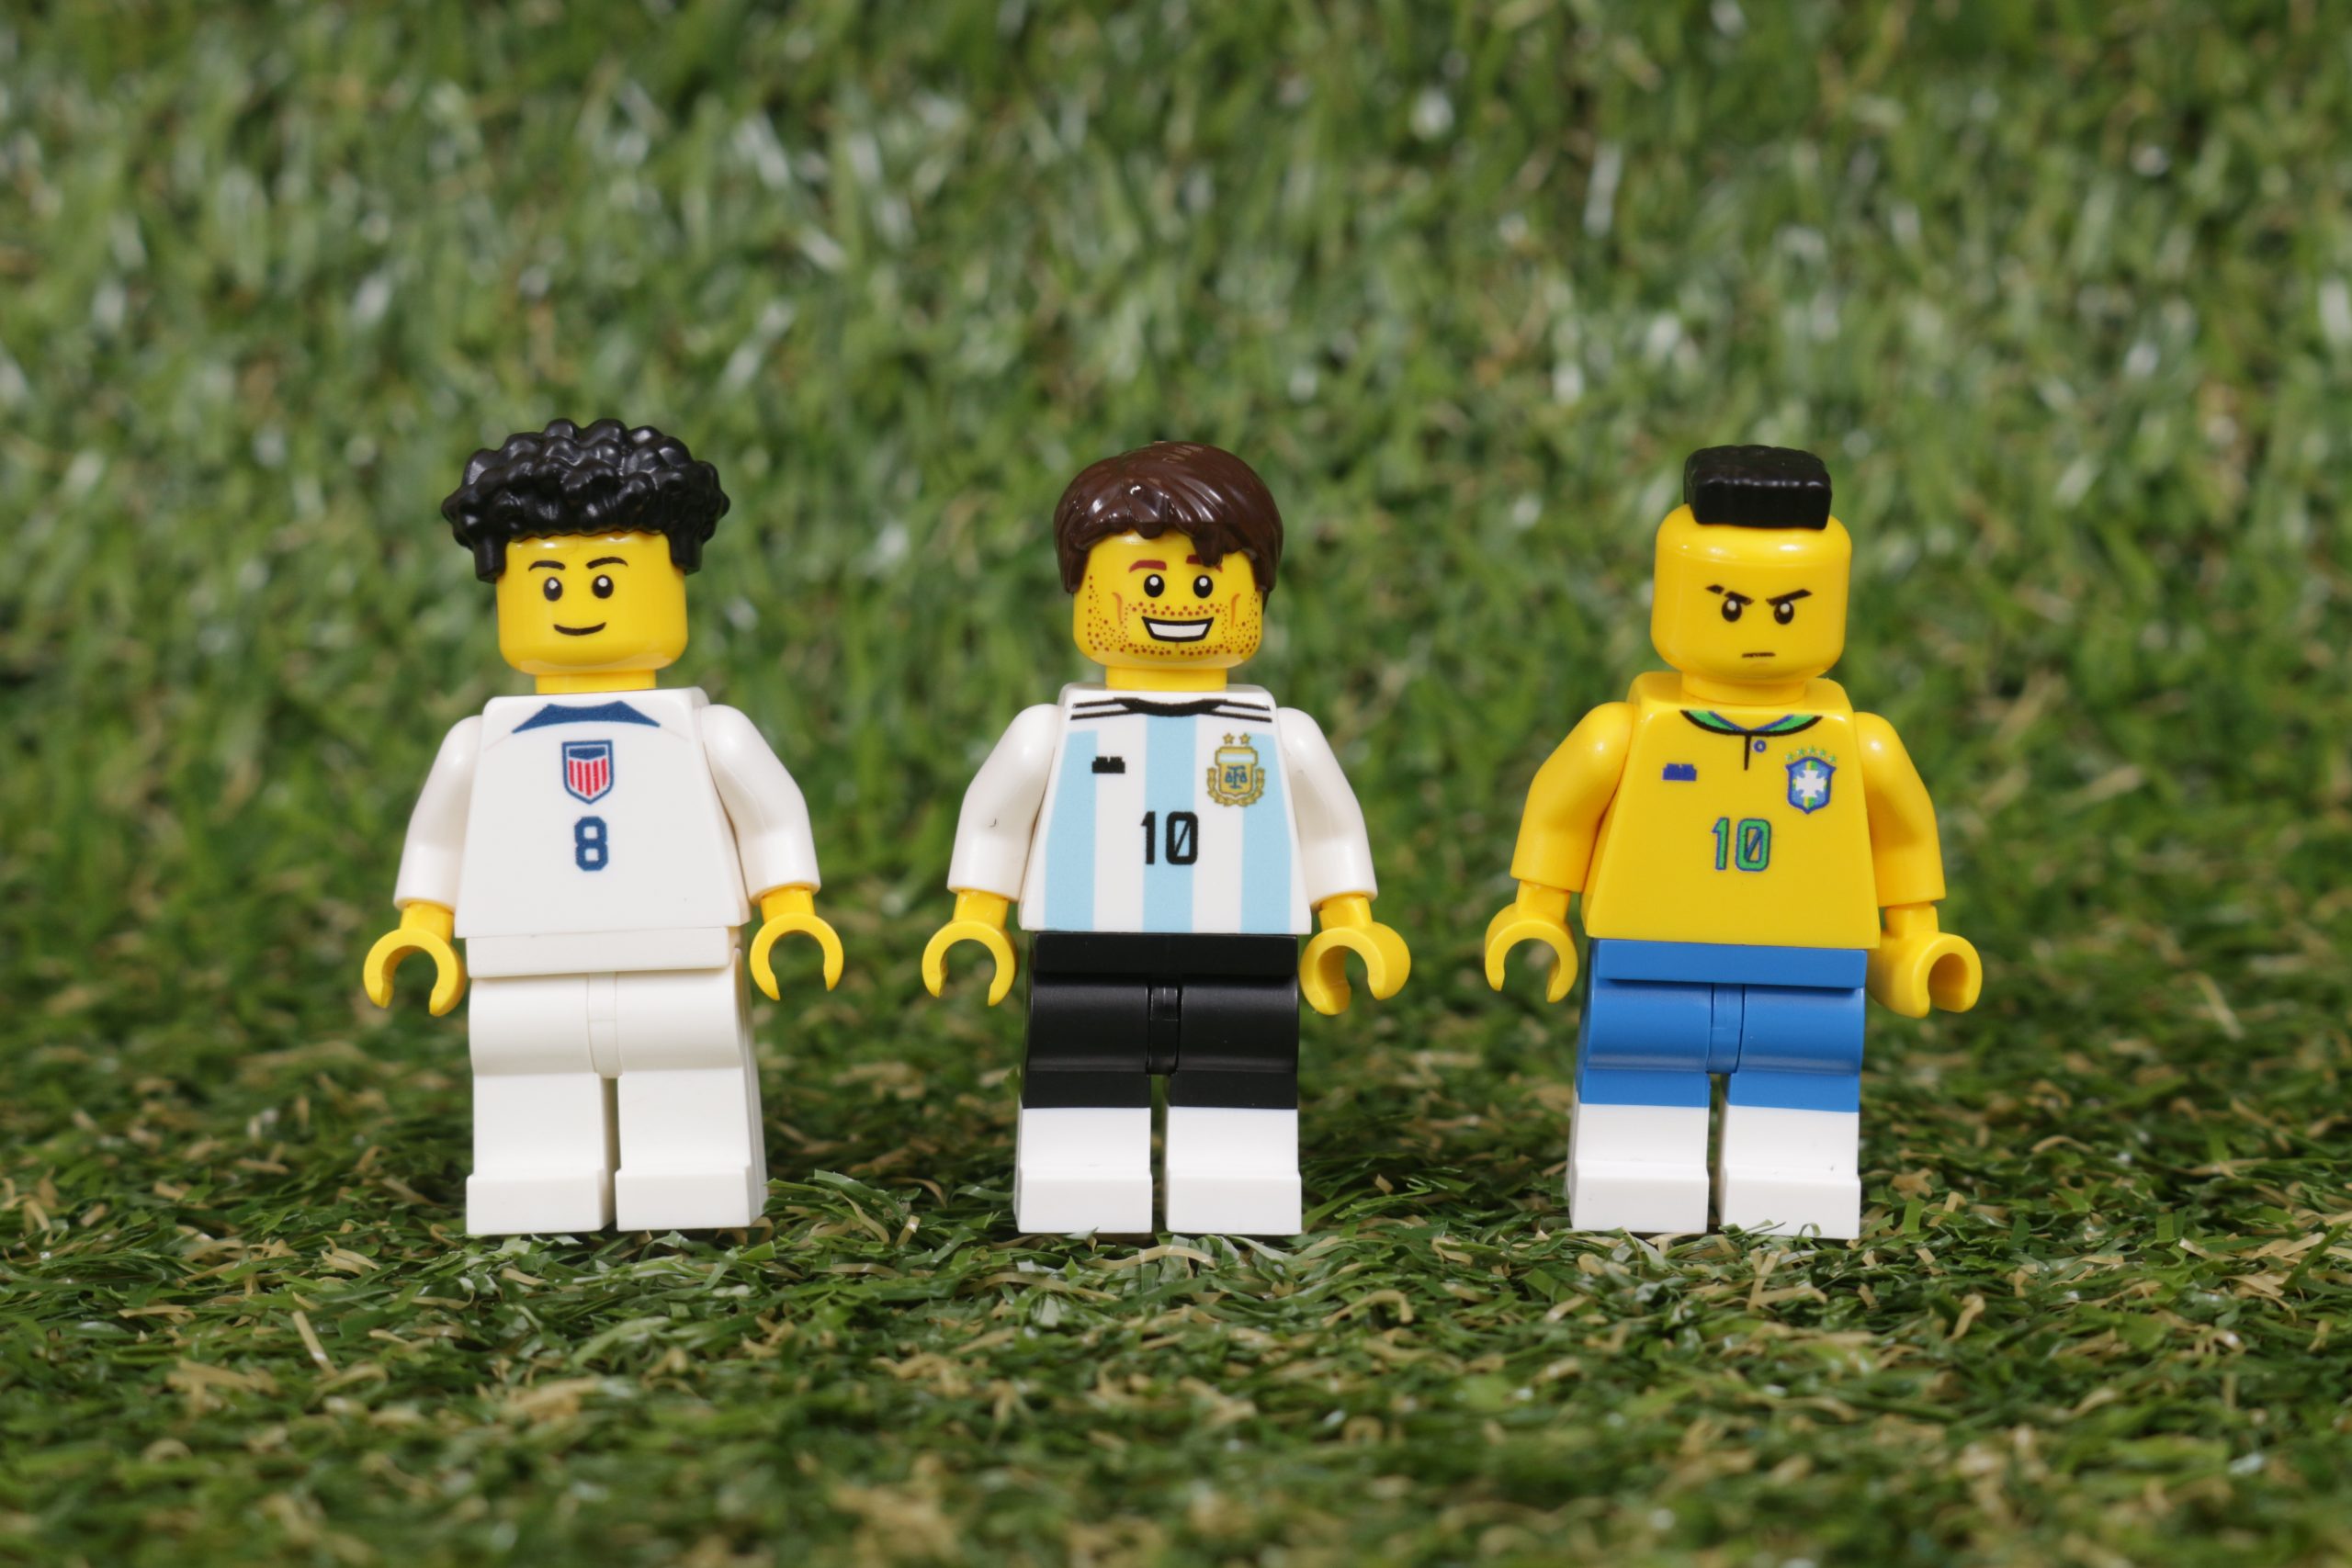 https://www.brickfanatics.com/wp-content/uploads/2022/12/LEGO-Football-minifigures-FIFA-World-Cup-2022-Qatar-Brazil-Argentina-USA-Messi-Neymar-McKennie-FireStar-Toys-review-2-scaled.jpg